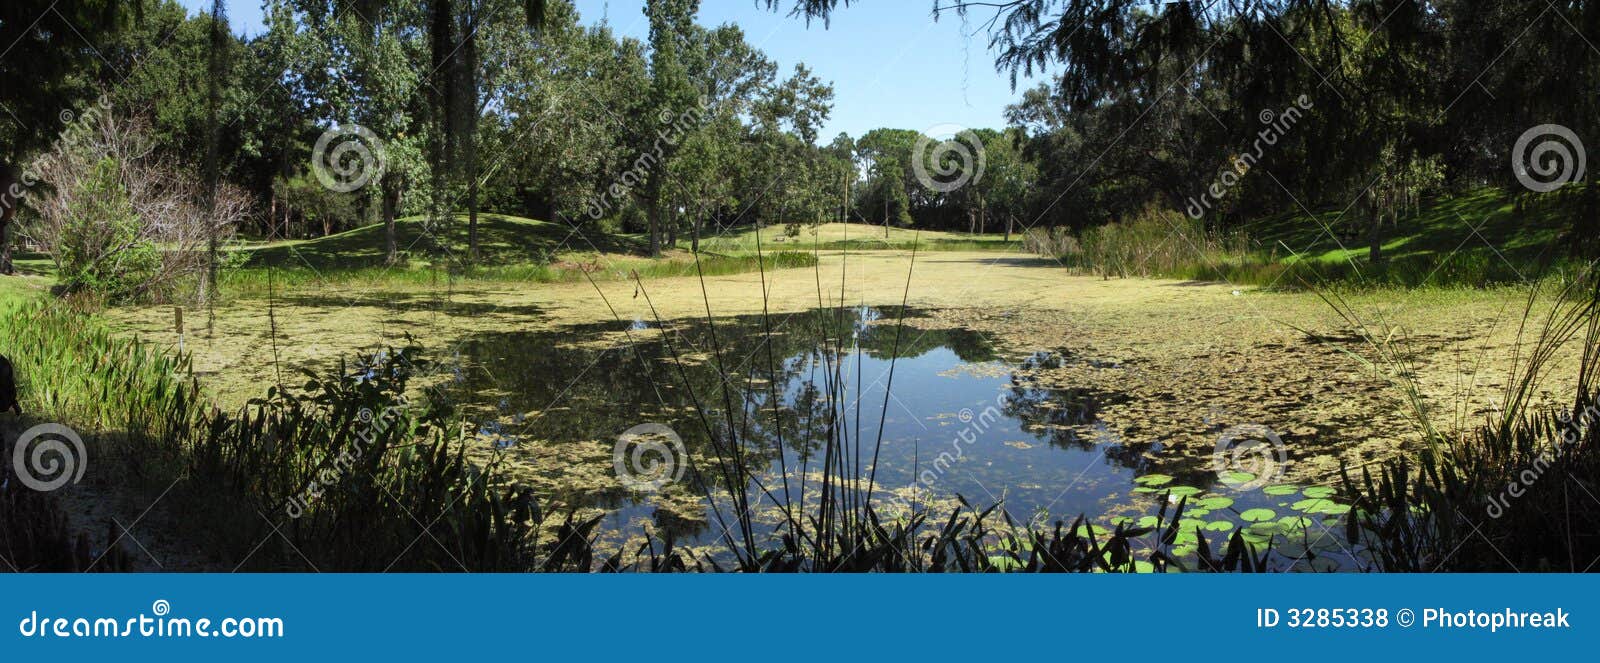 lake in lush park in florida